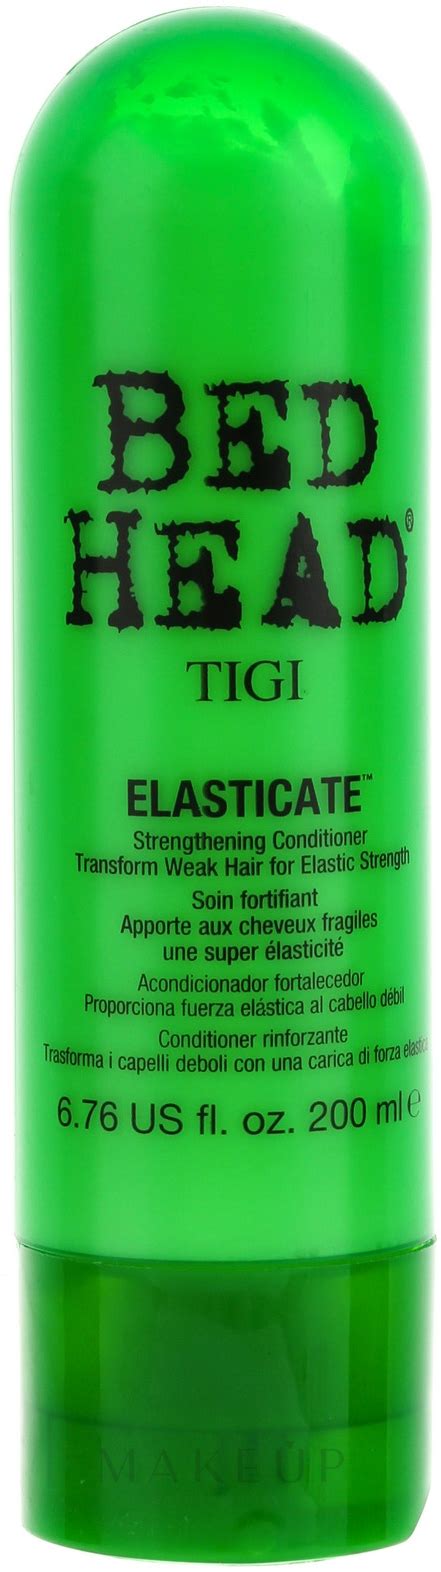 Tigi Bed Head Elasticate Strengthening Conditioner Strengthening Hair